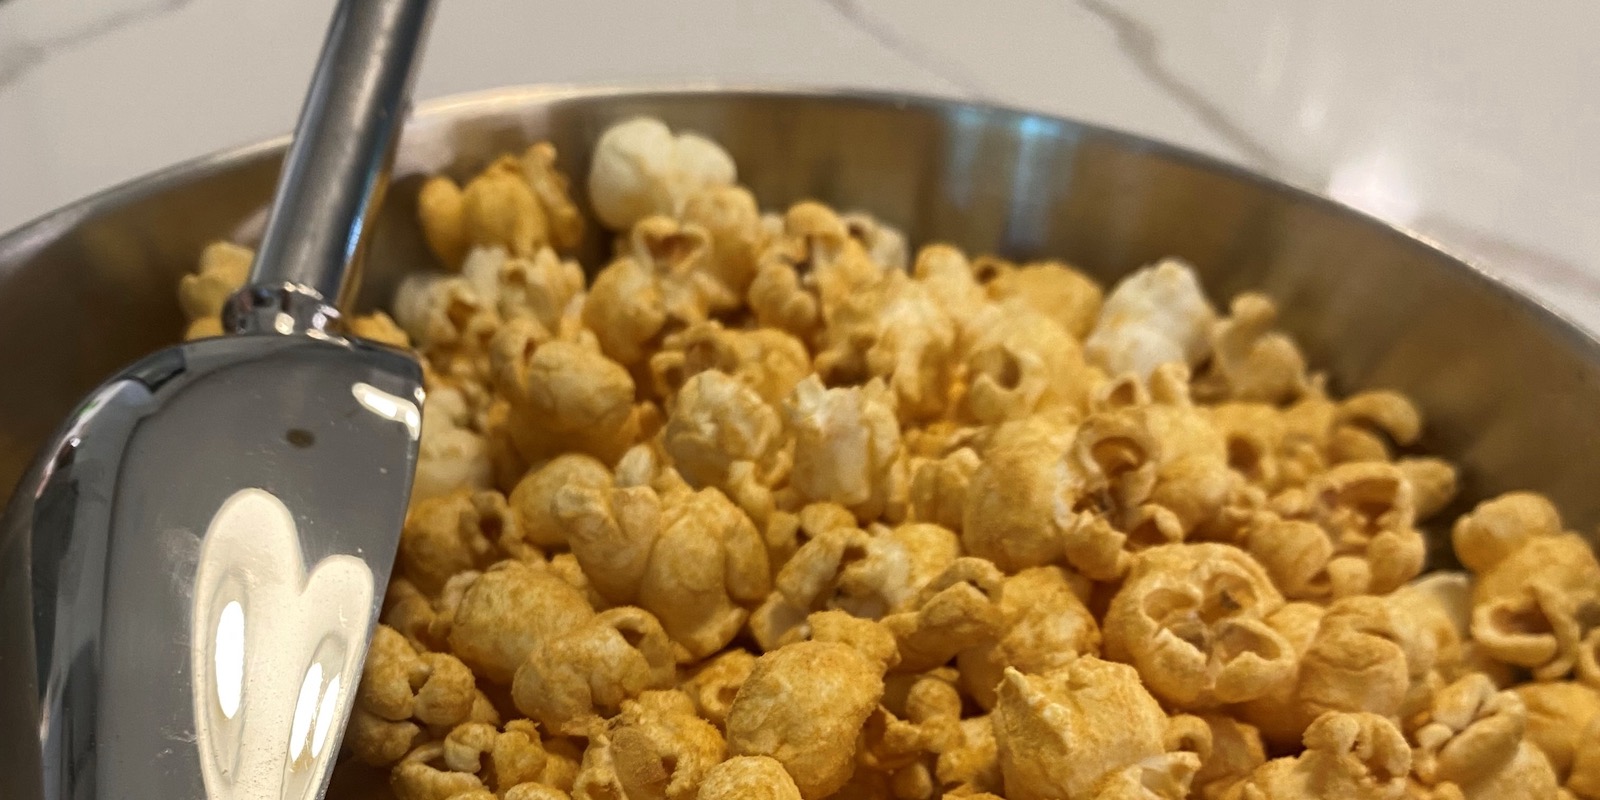 Popcorn with soy sauce powder